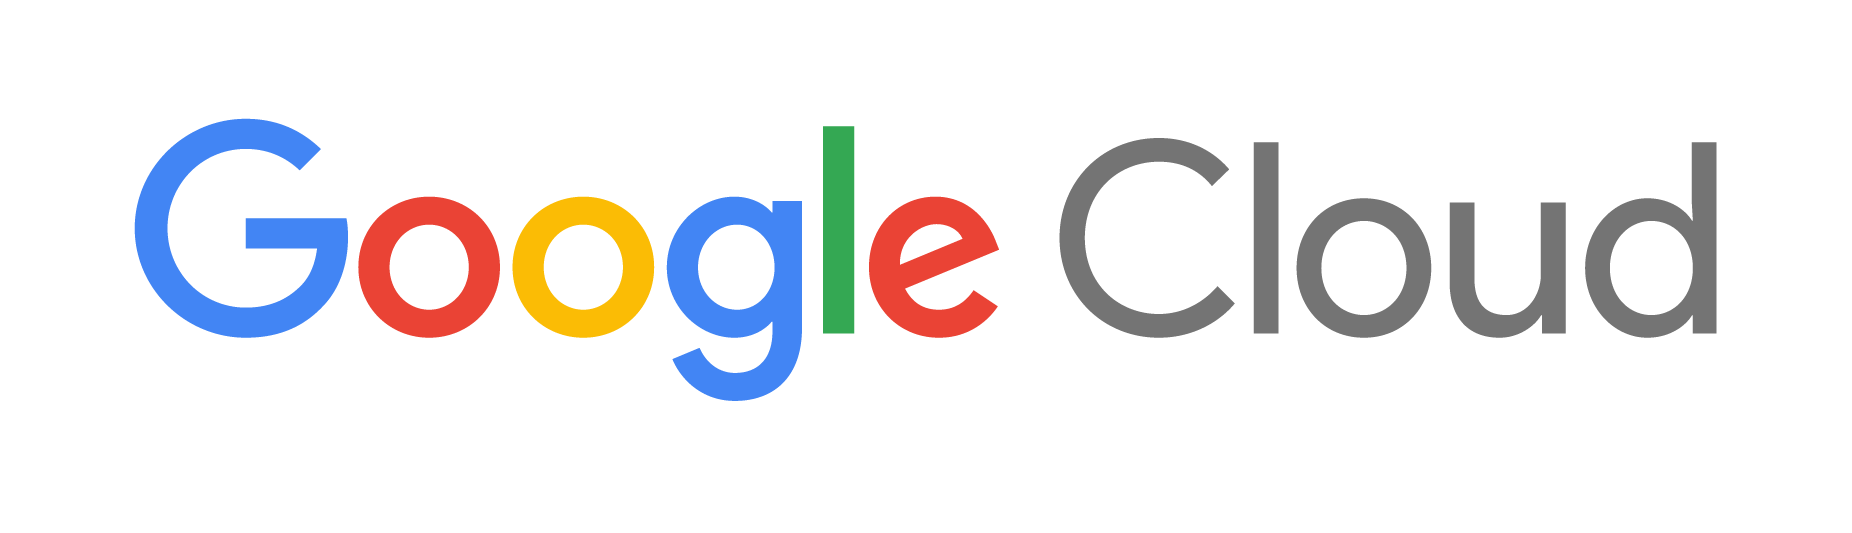 Google Cloud logo - Teroxlab